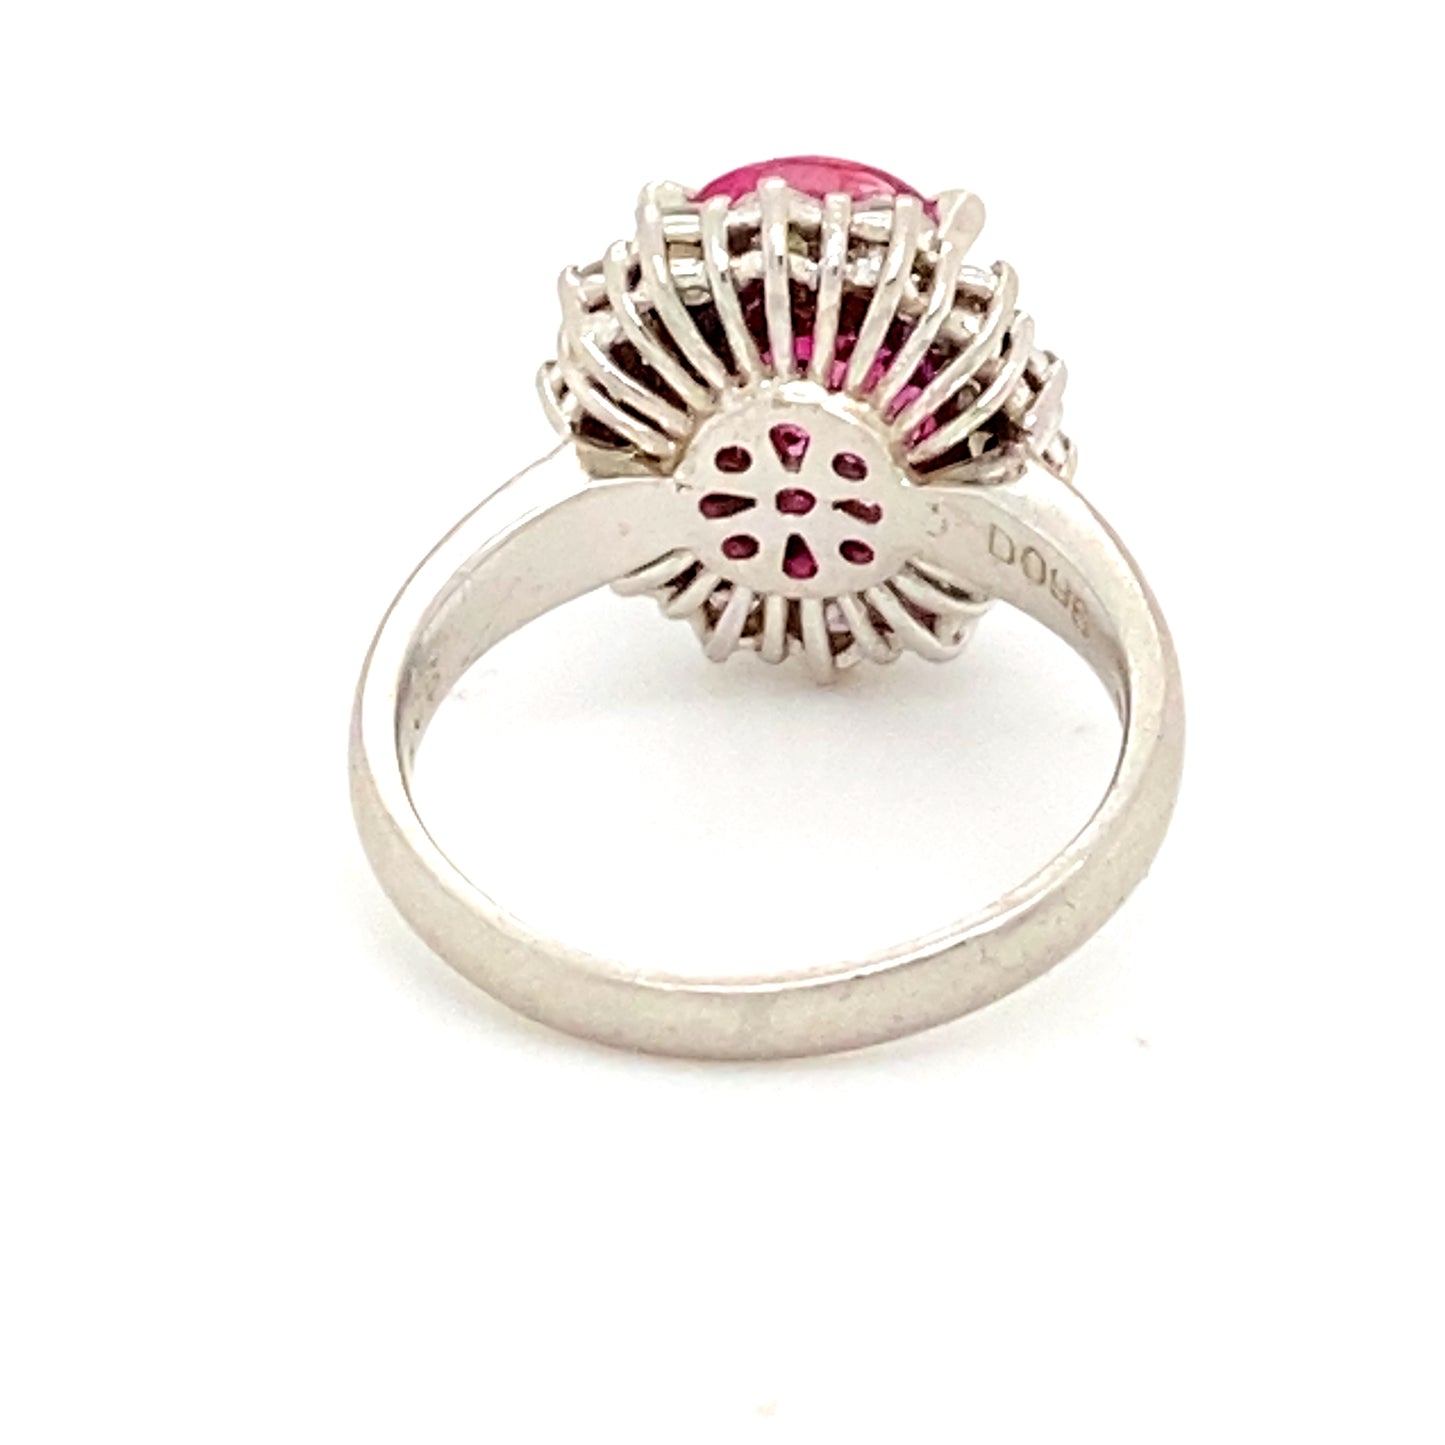 Burma Pink Ruby Ring with Diamonds